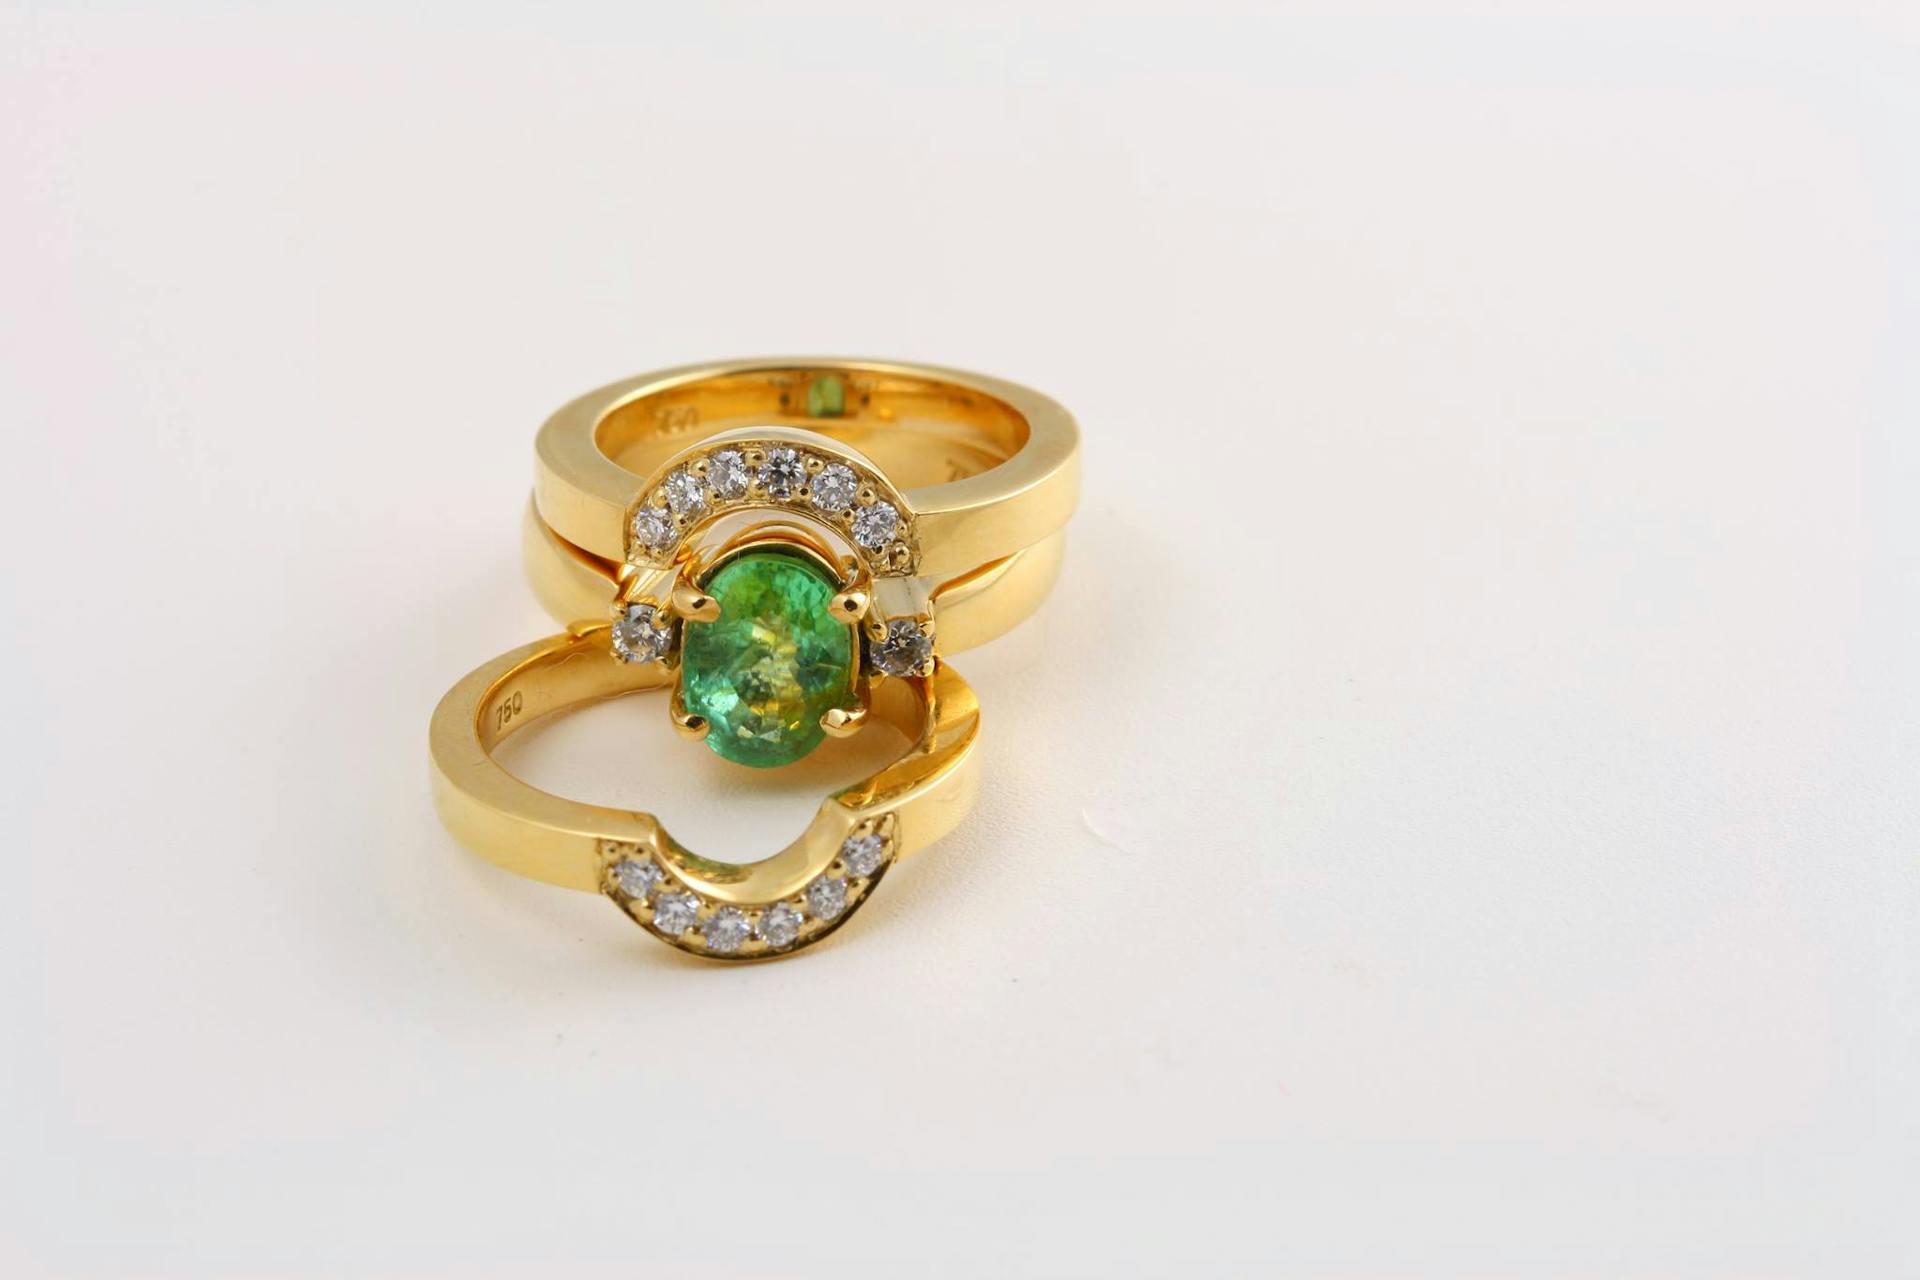 paraiba tourmaline buying guide - Green paraiba and diamond ring set